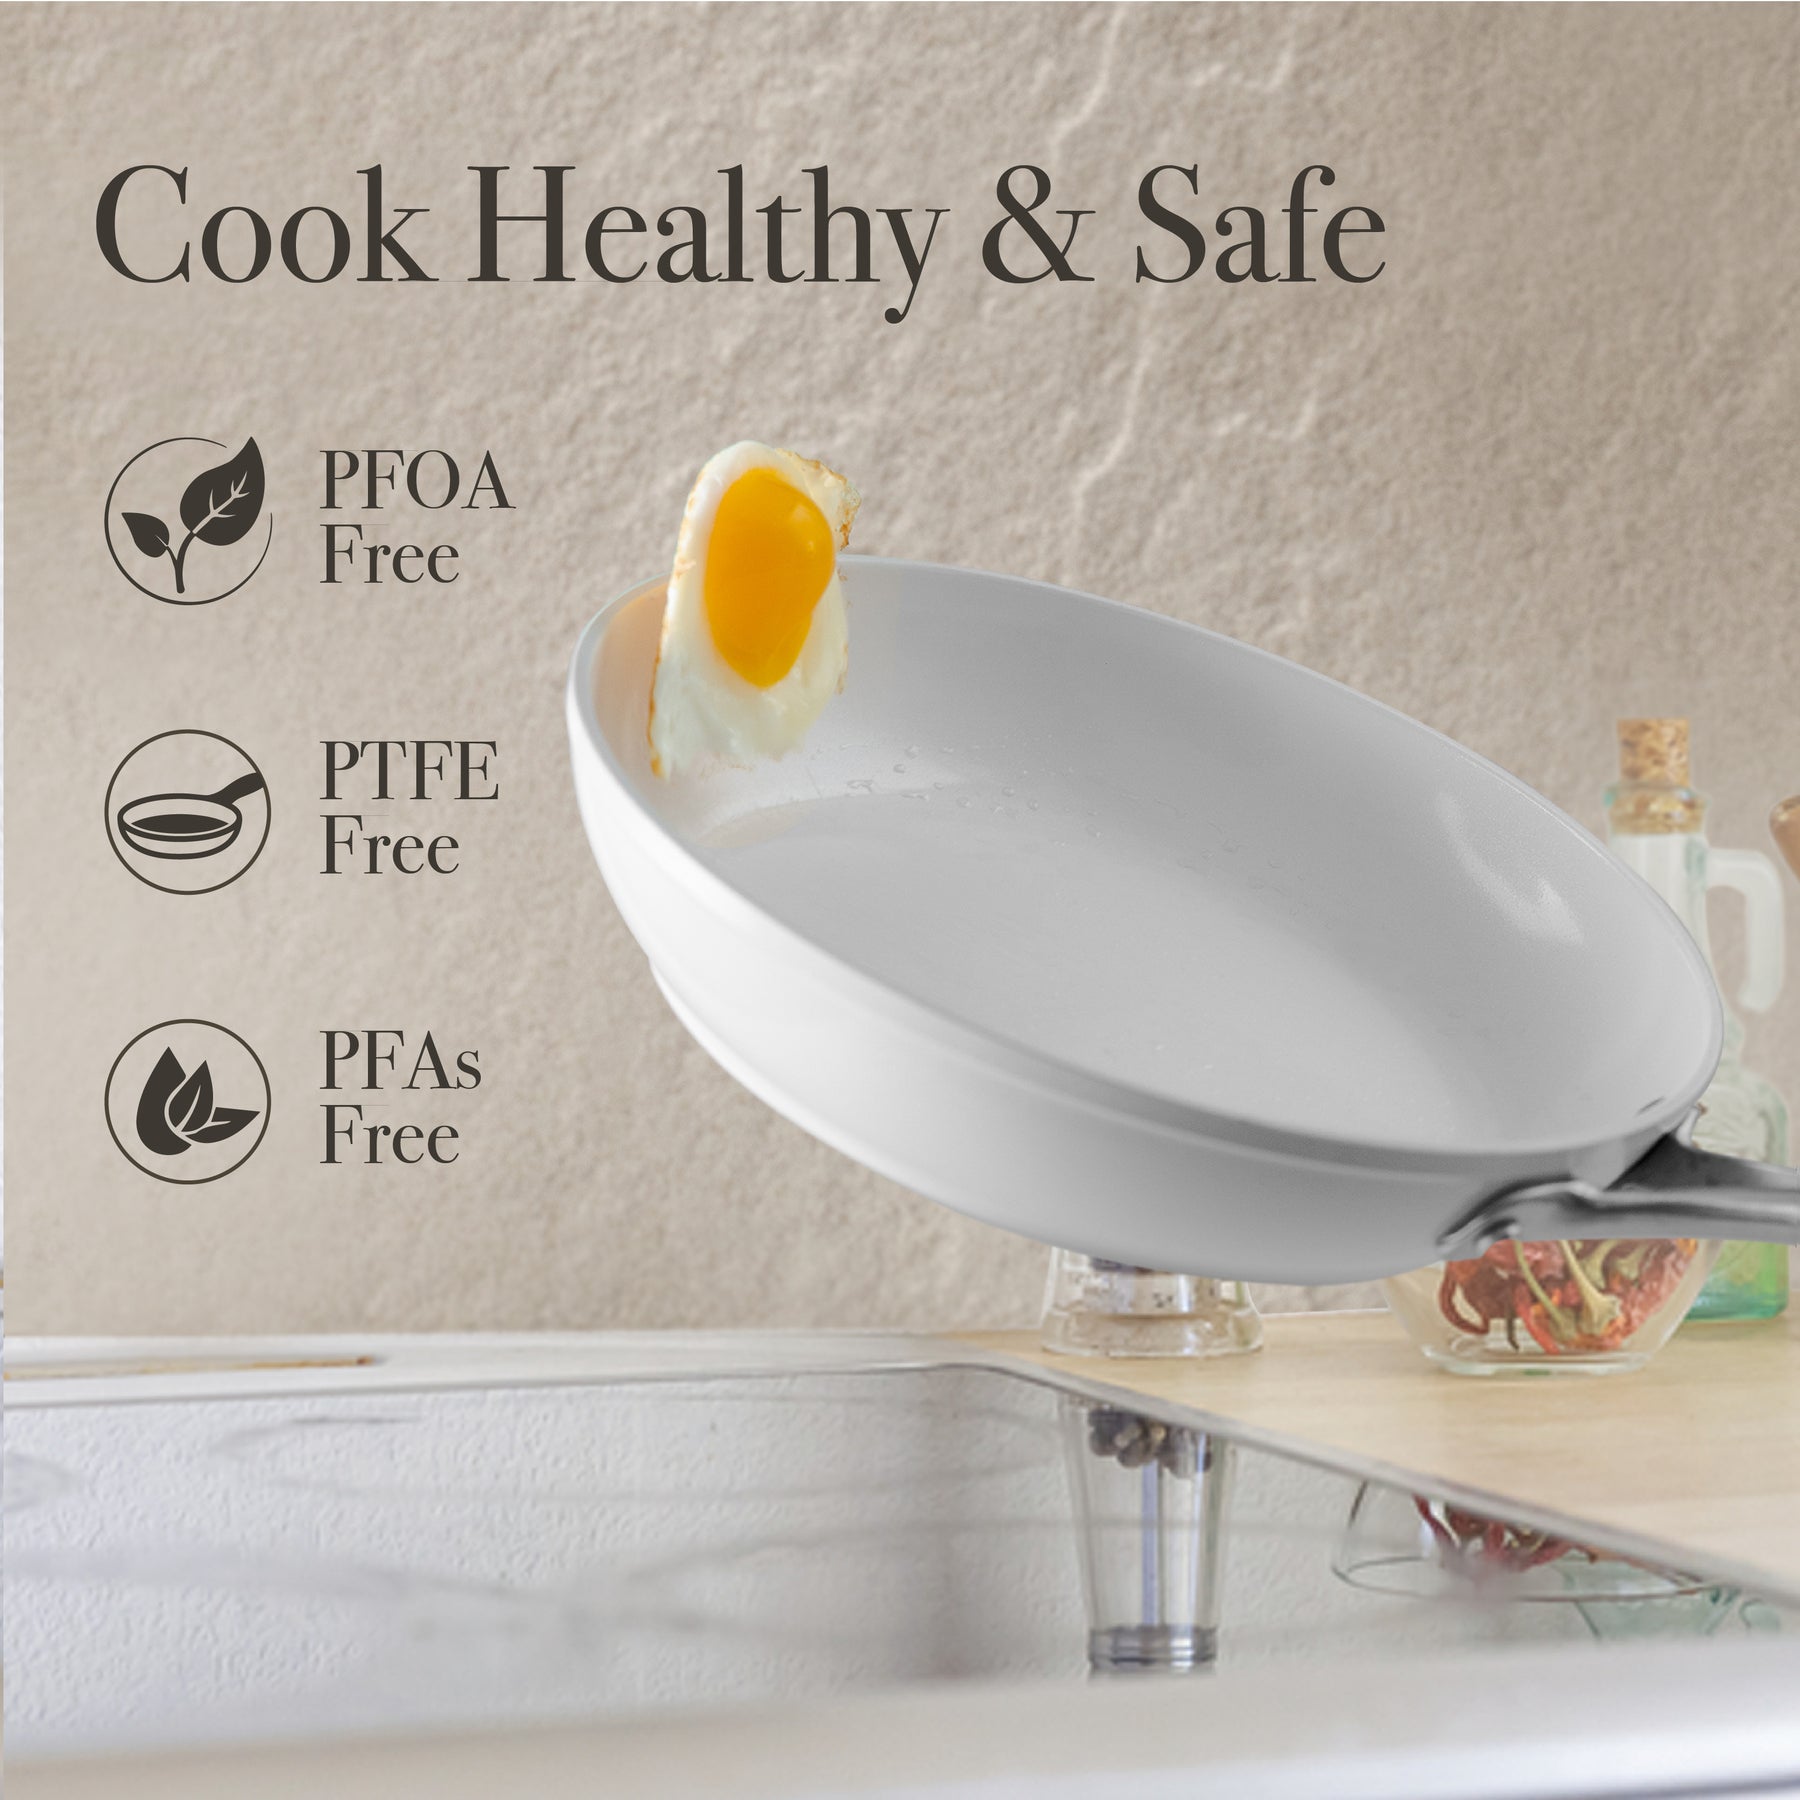 PTFE Free Cookware